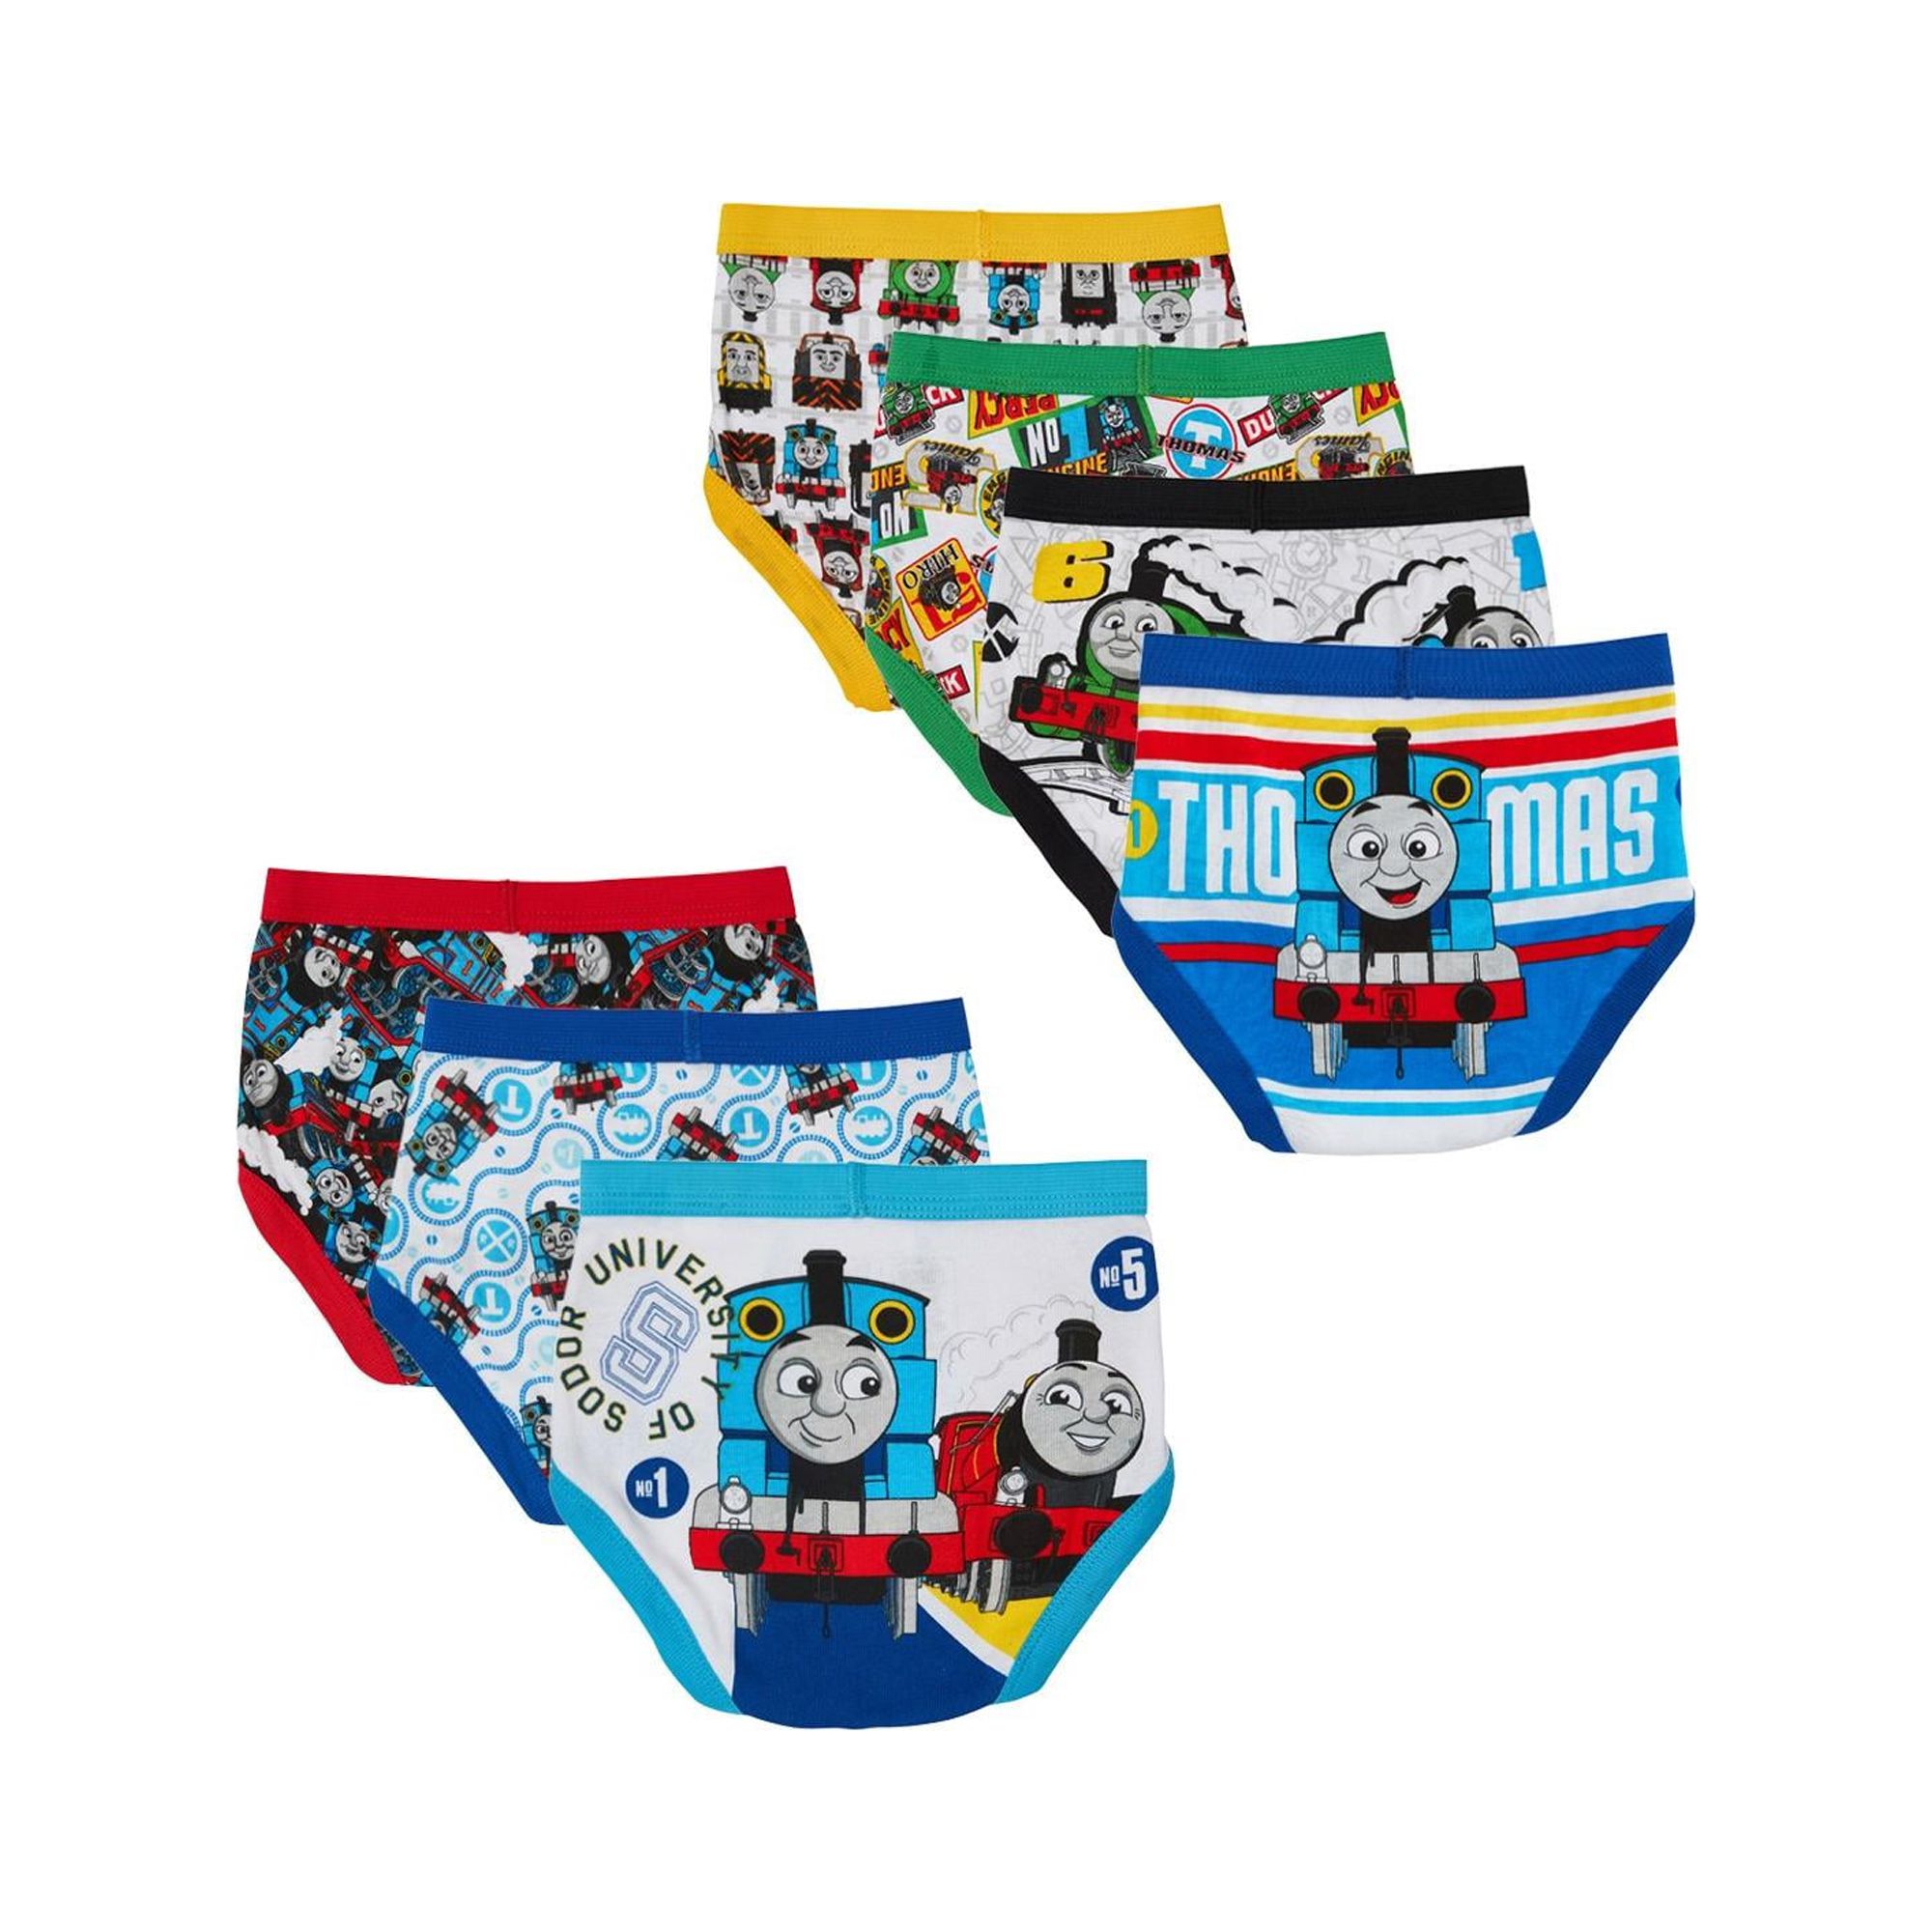 Toddler Boys' Thomas Underwear, 7-Pack - image 3 of 3